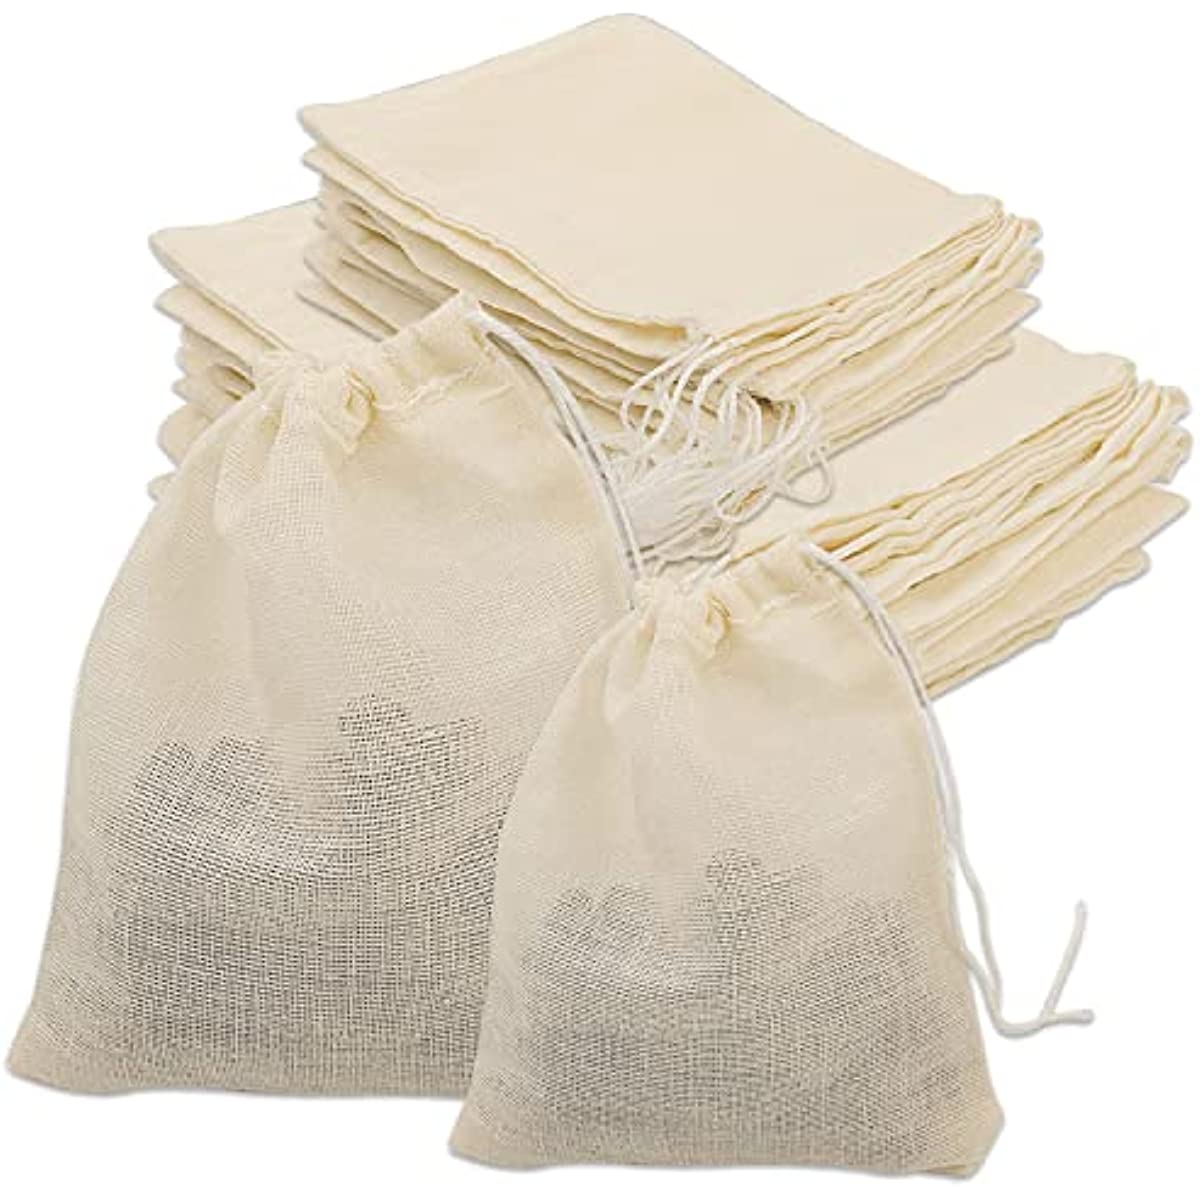 100 Pcs Muslin Bags Small,8X10cm Muslin Drawstring Bags Reusable Tea  Bags,Tea Filter Bags Mesh Bags for Filtering,Reusable Mesh - AliExpress